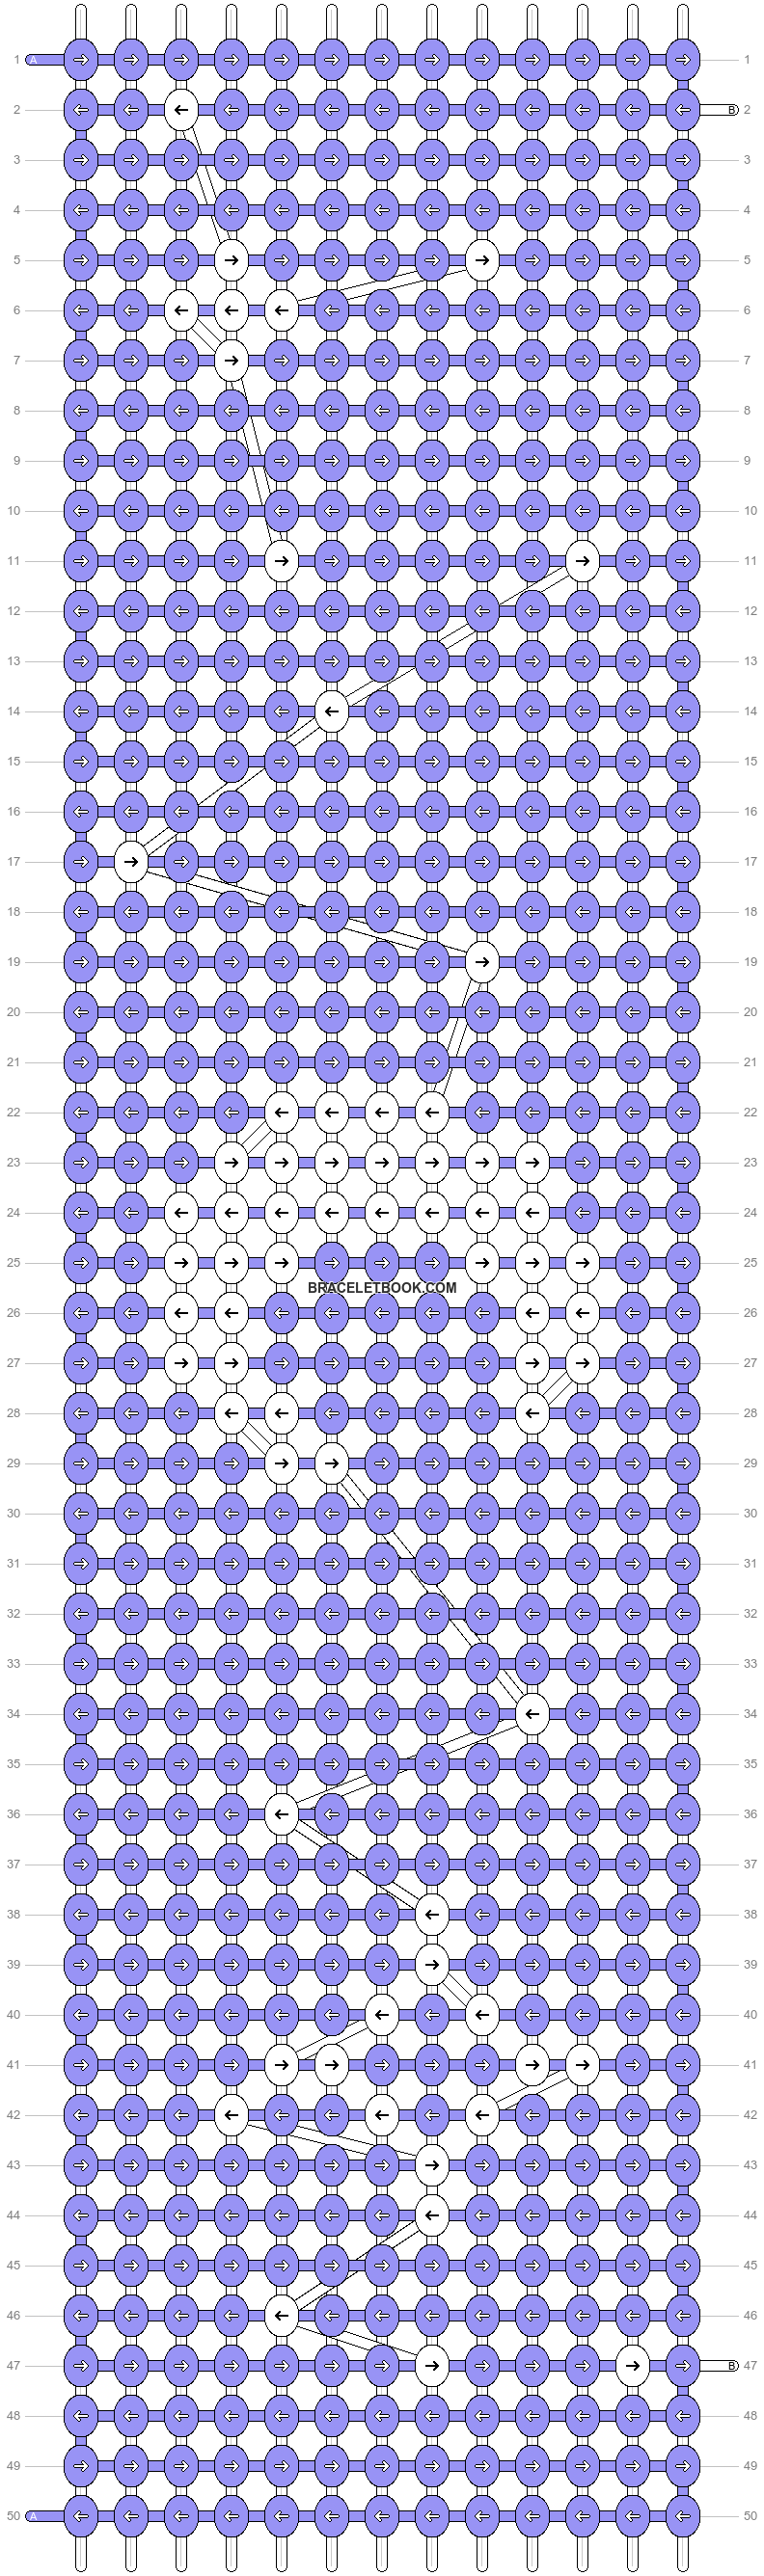 Alpha pattern #57316 variation #118479 pattern